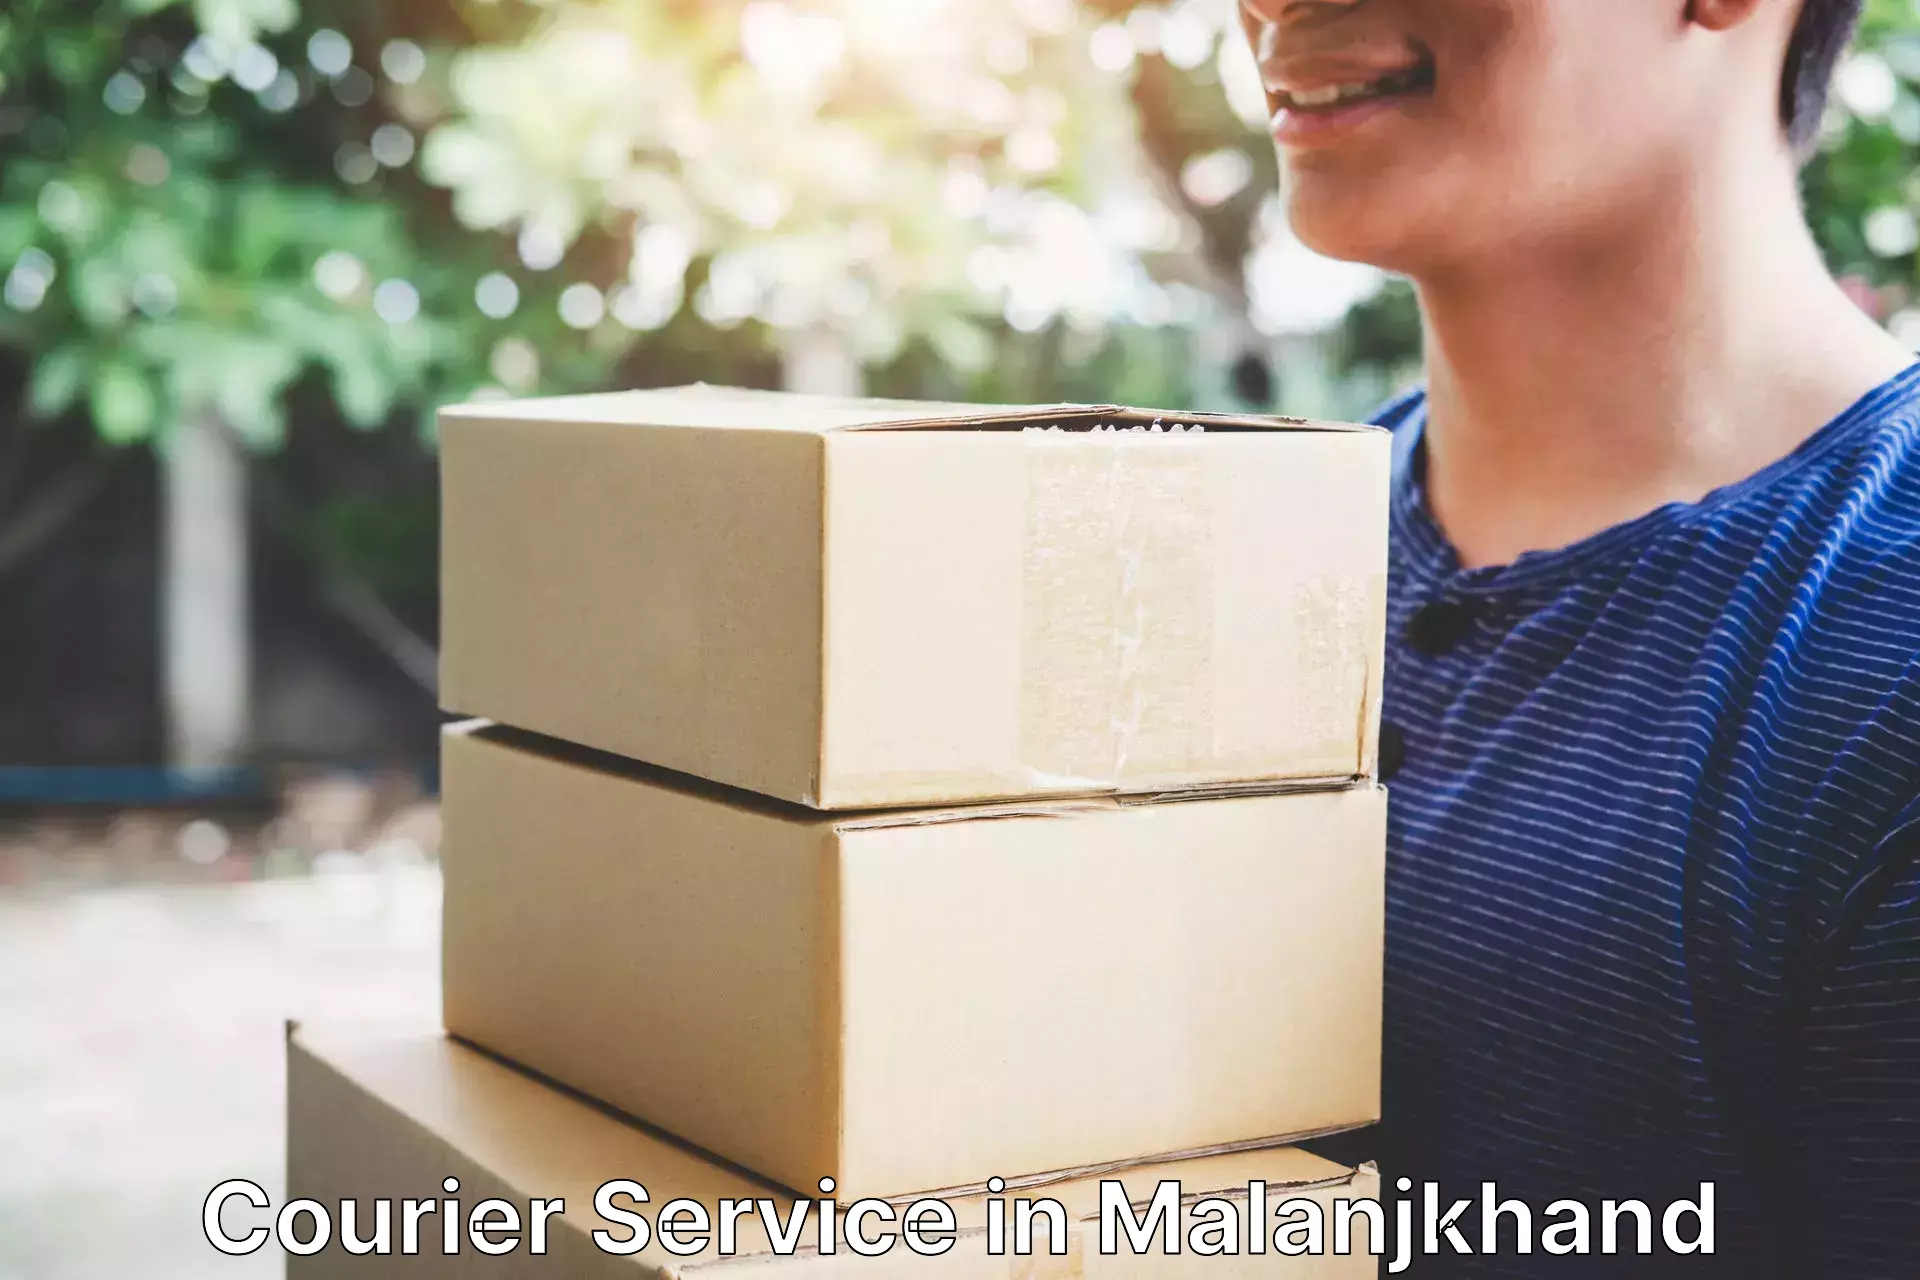 Flexible parcel services in Malanjkhand